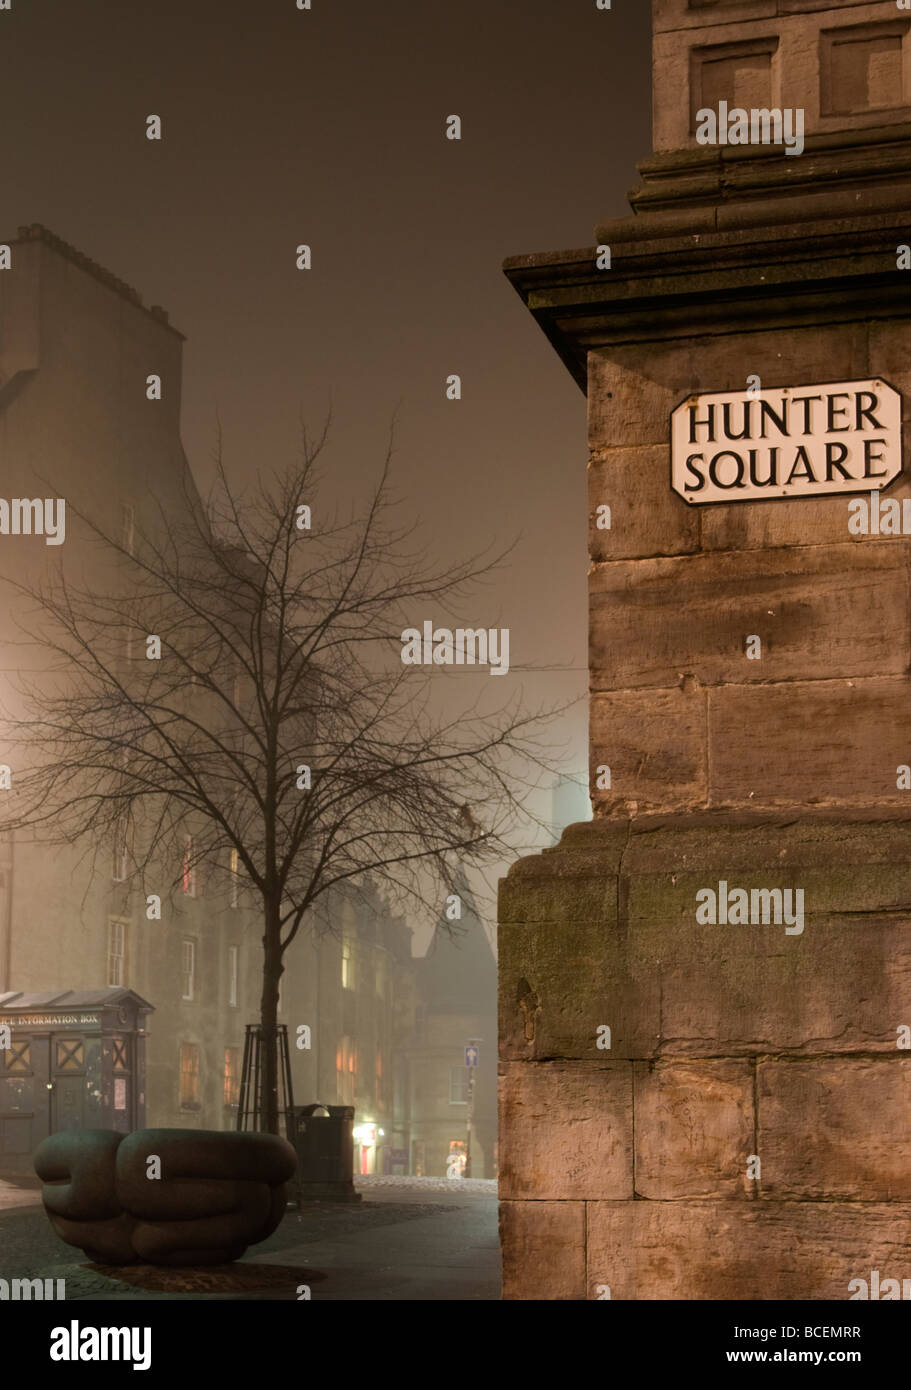 The corner of Hunter Square off the Royal Mile (High Street), Edinburgh, Scotland on a foggy night. Stock Photo